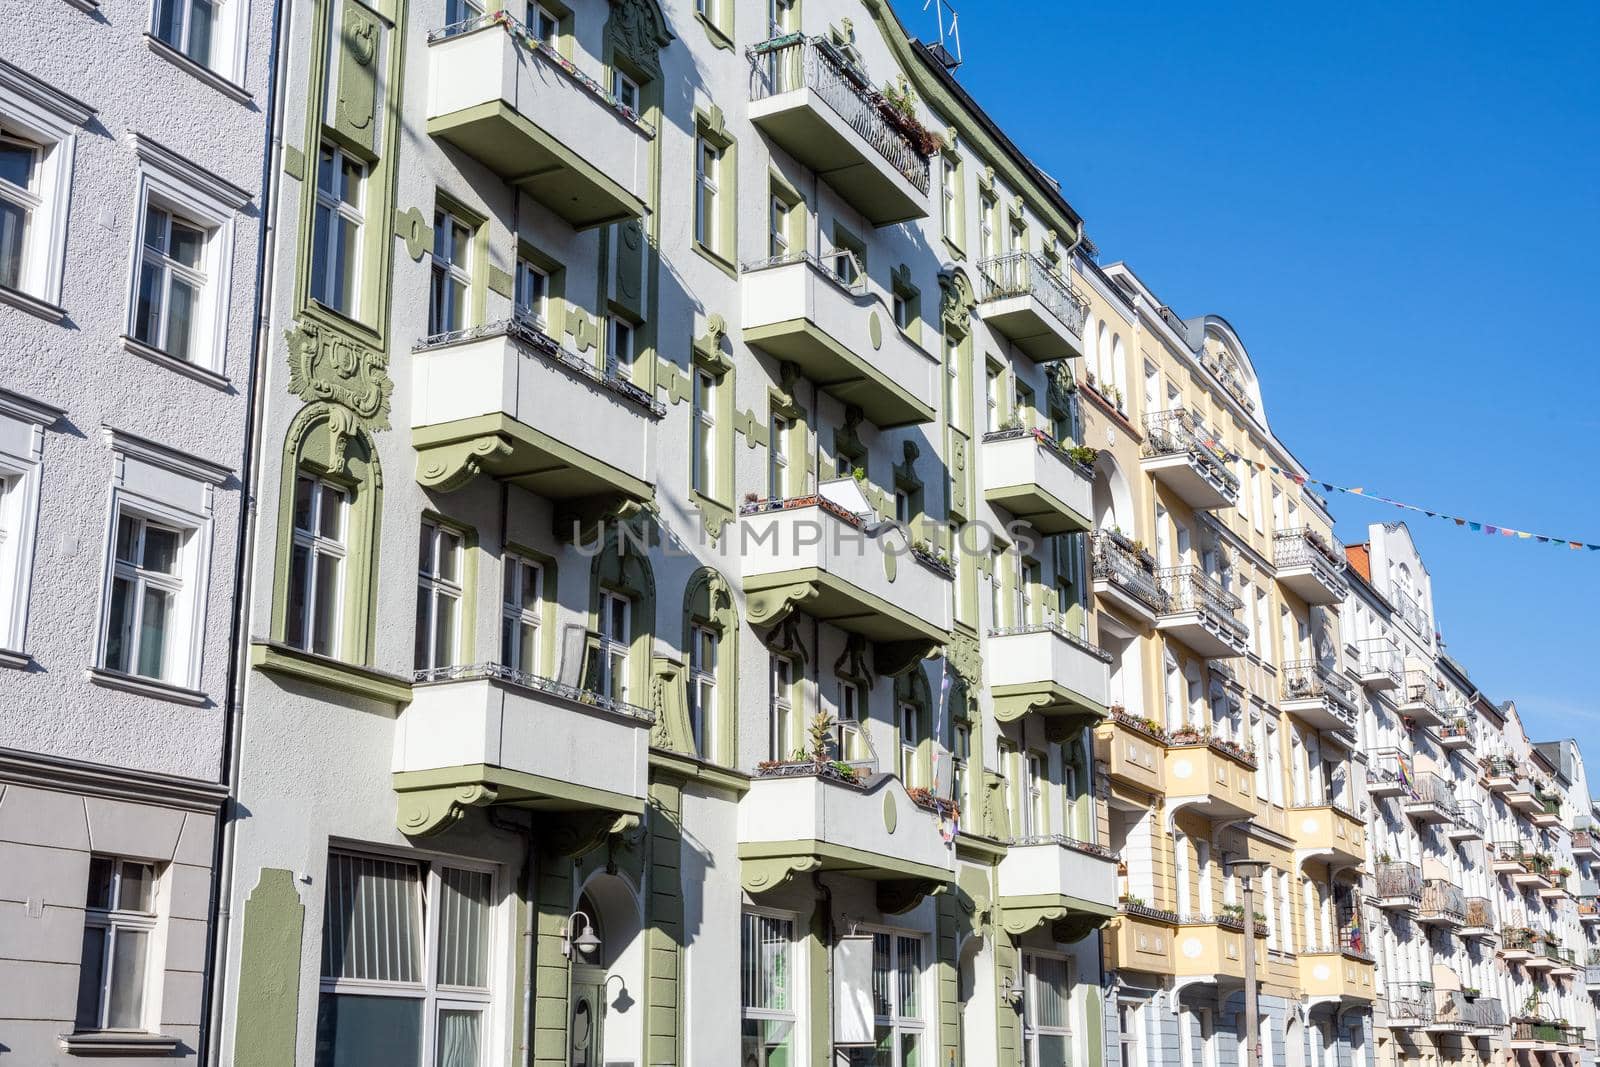 Nice renovated old apartment buildings seen in Berlin, Germany